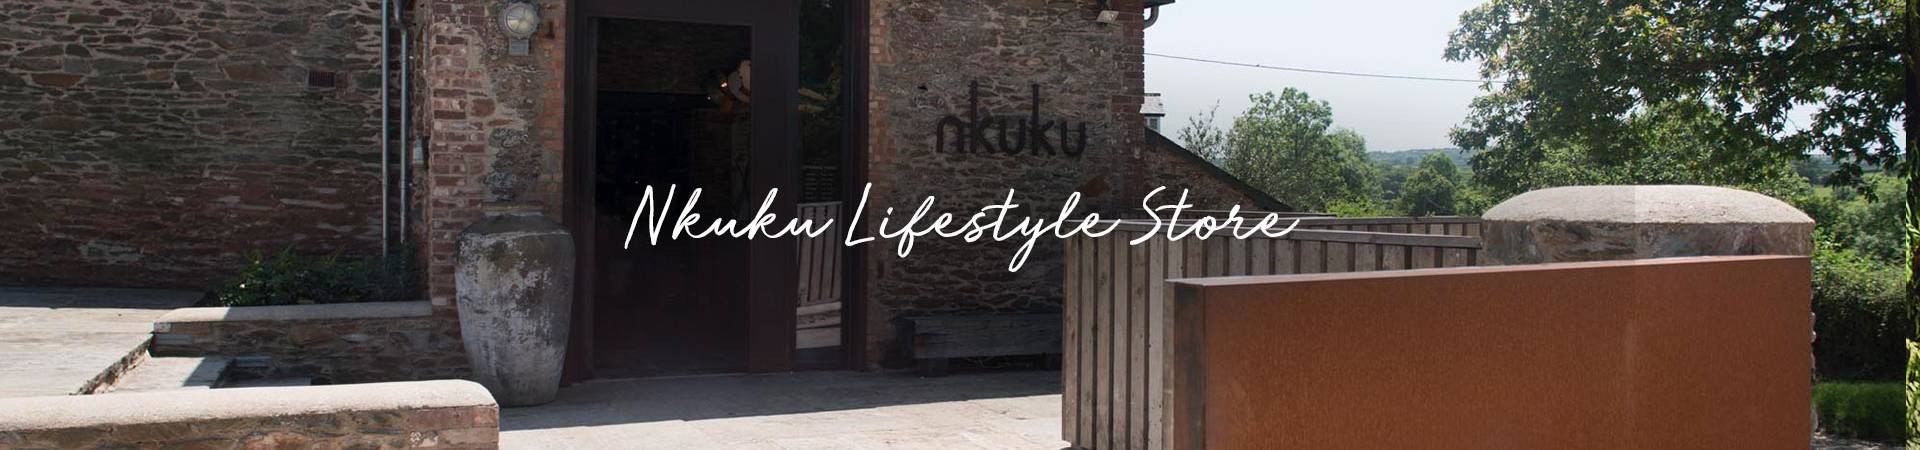 Nkuku_Art-of-Making_Header_Lifestyle-Store_1.jpg